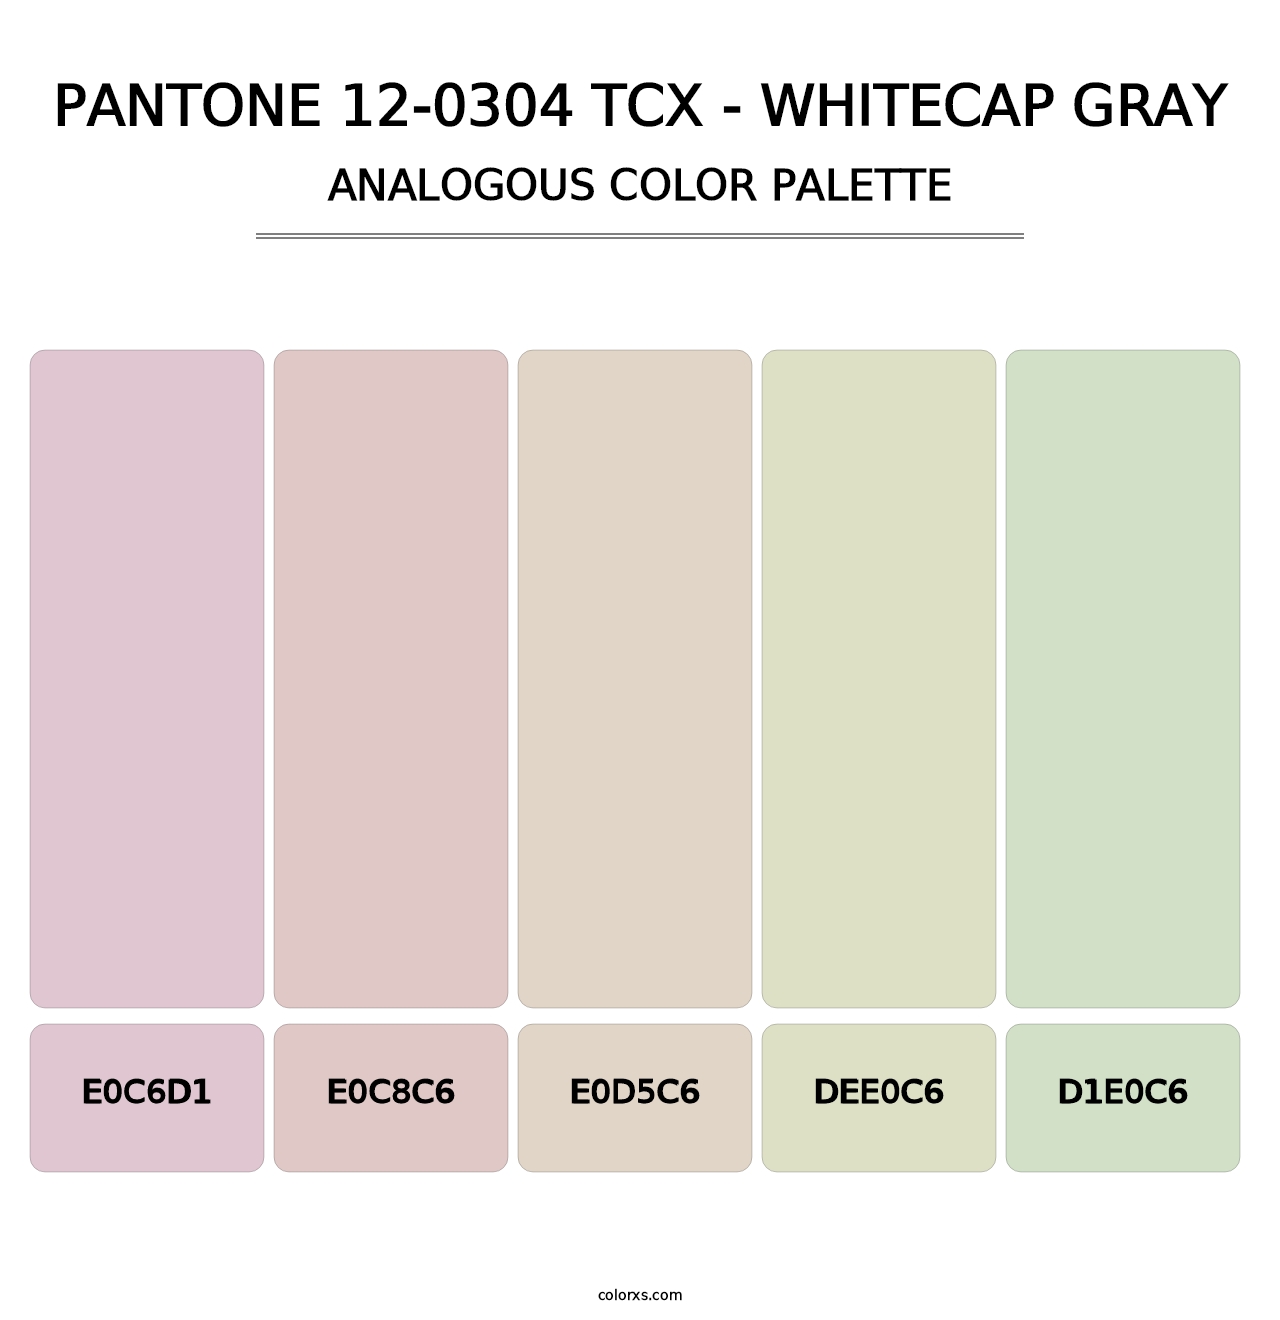 PANTONE 12-0304 TCX - Whitecap Gray - Analogous Color Palette